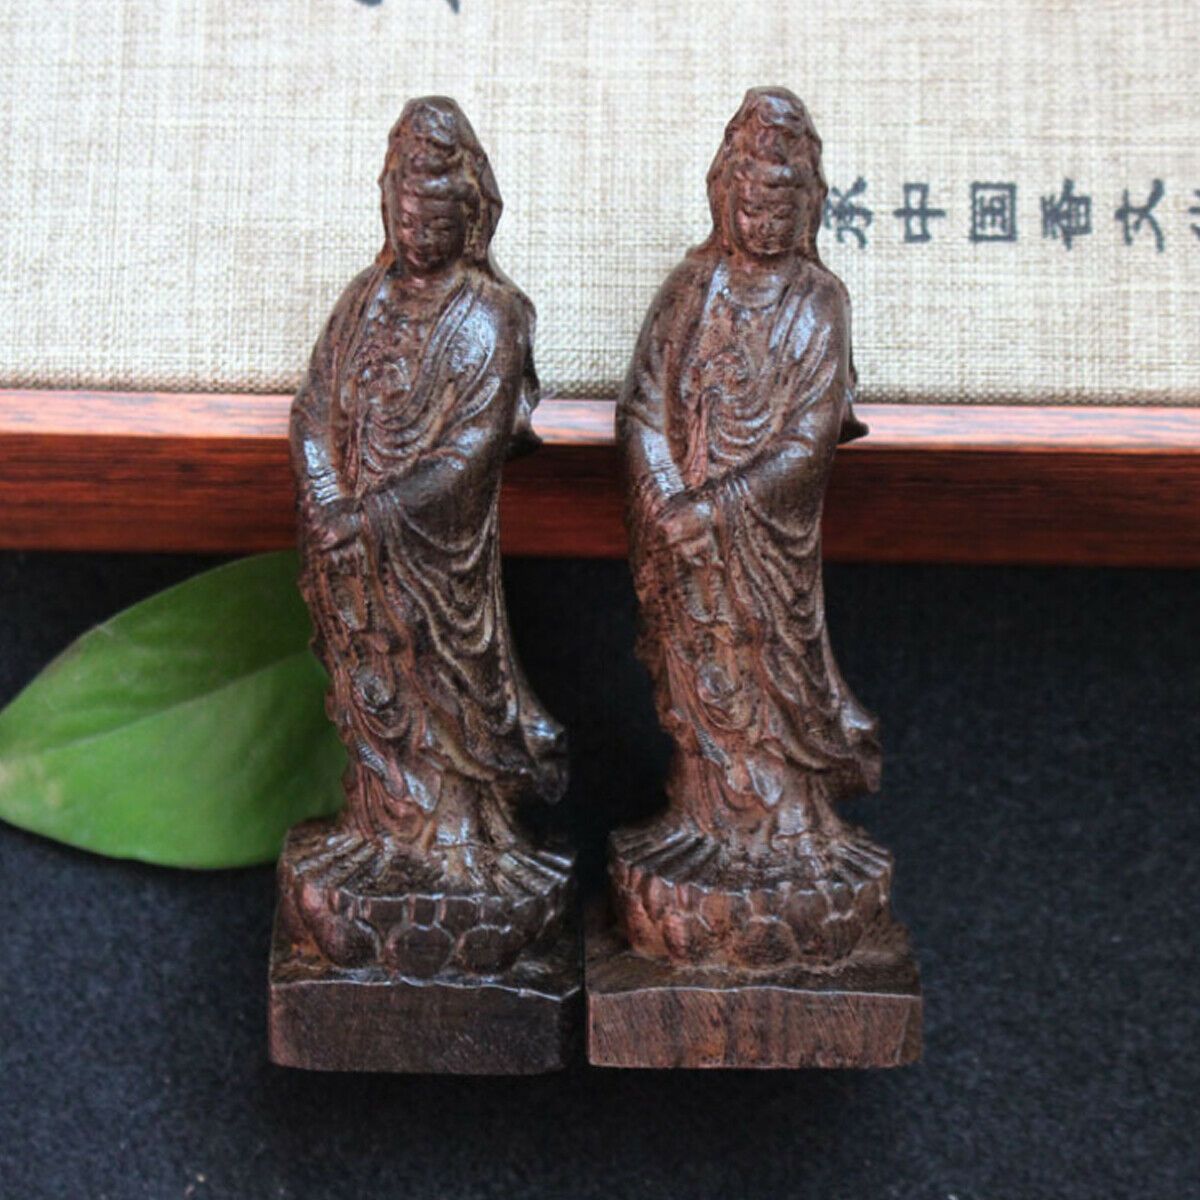 2PCS Sandalwood Carved Buddhism Guanyin Bodhisattva Manual Sculpture Home Decor